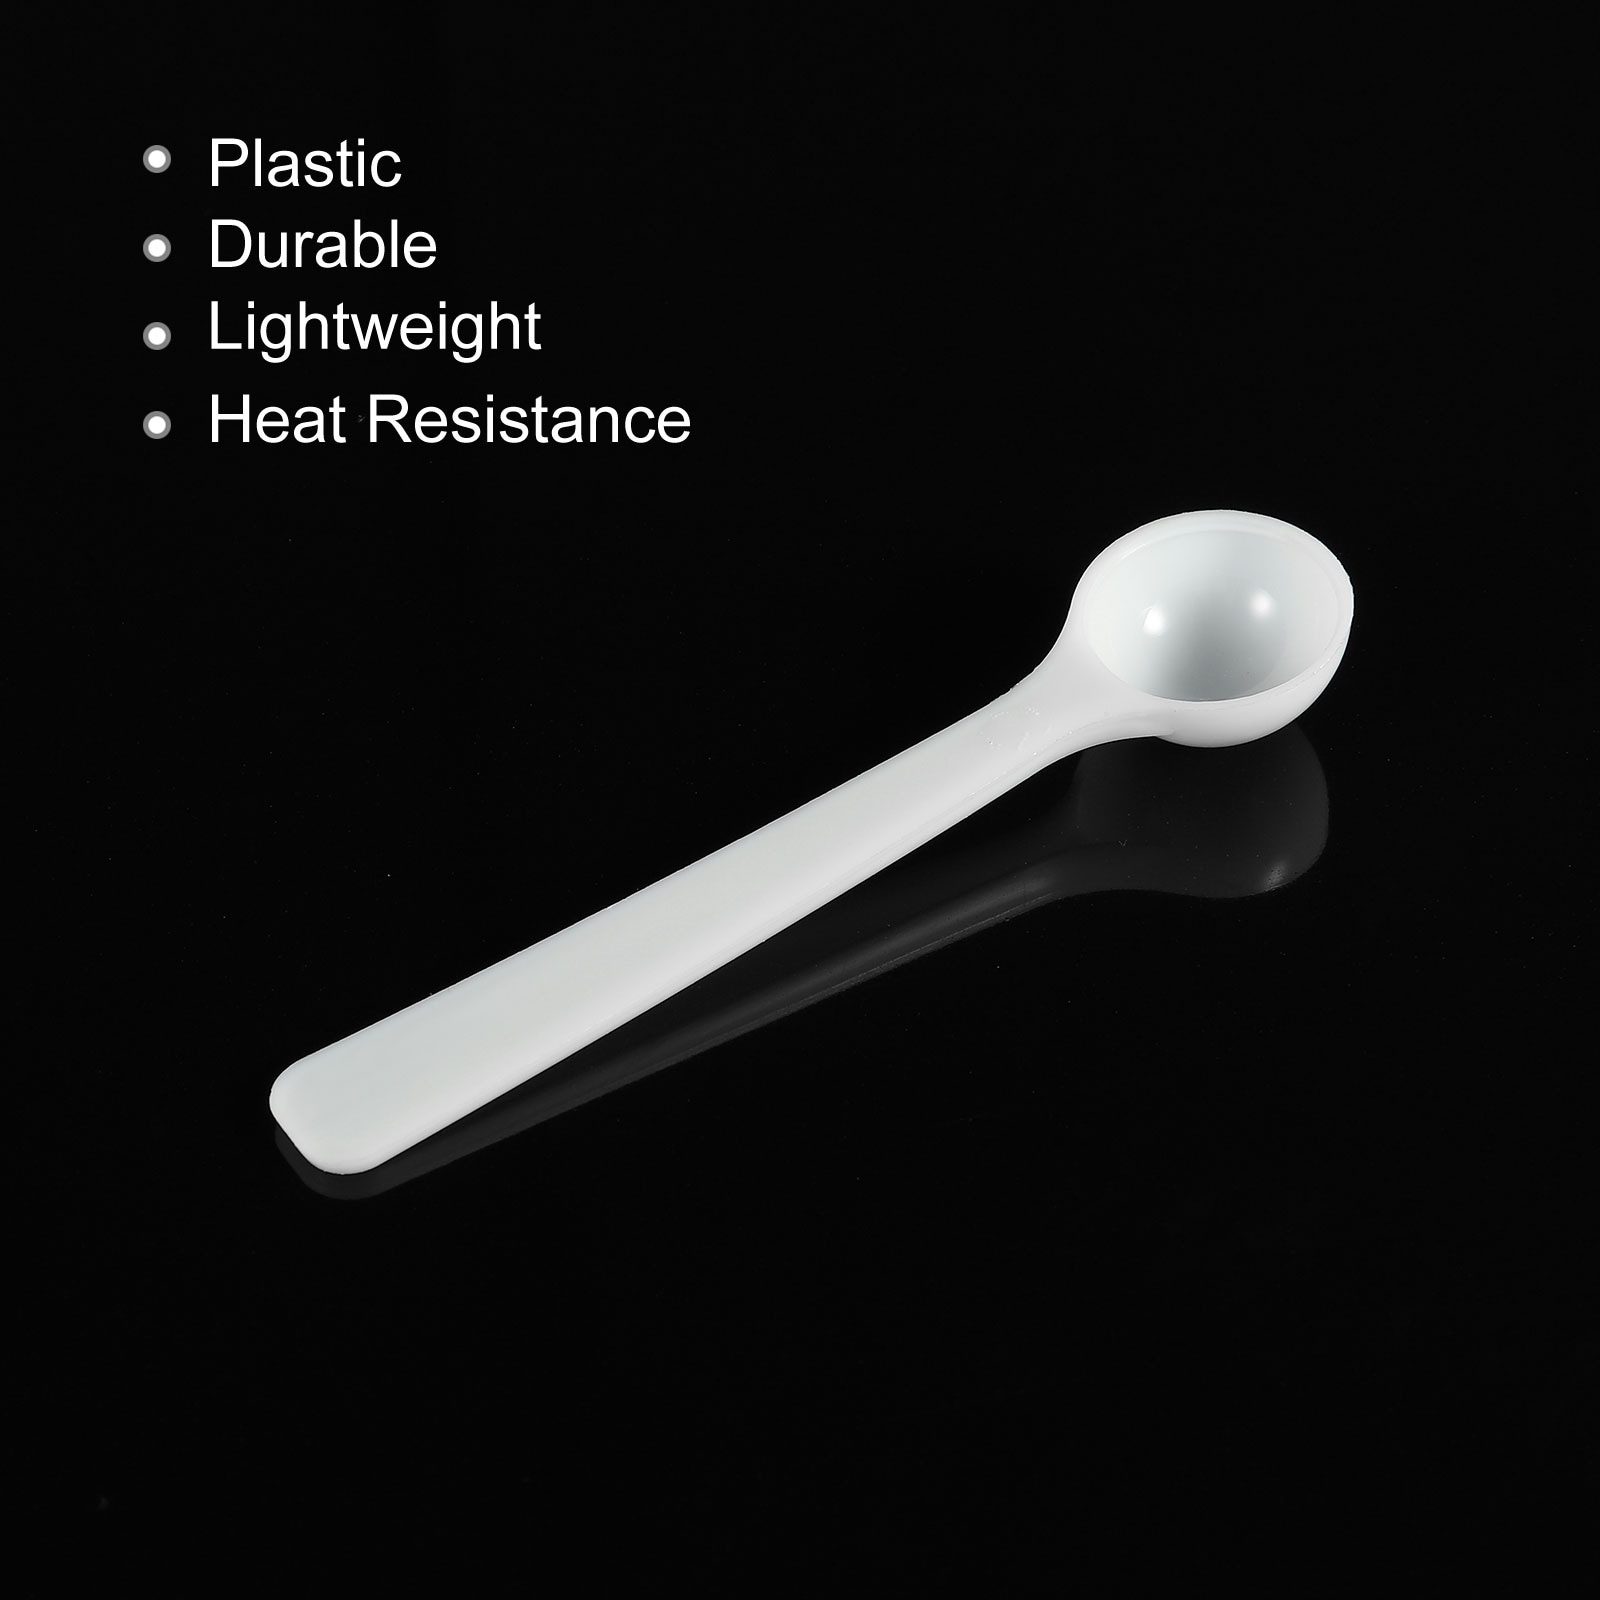 1cc Mini Plastic Scoop Mixing Measuring Spoons Tiny Small Apx 1/5 teaspoon  1ml